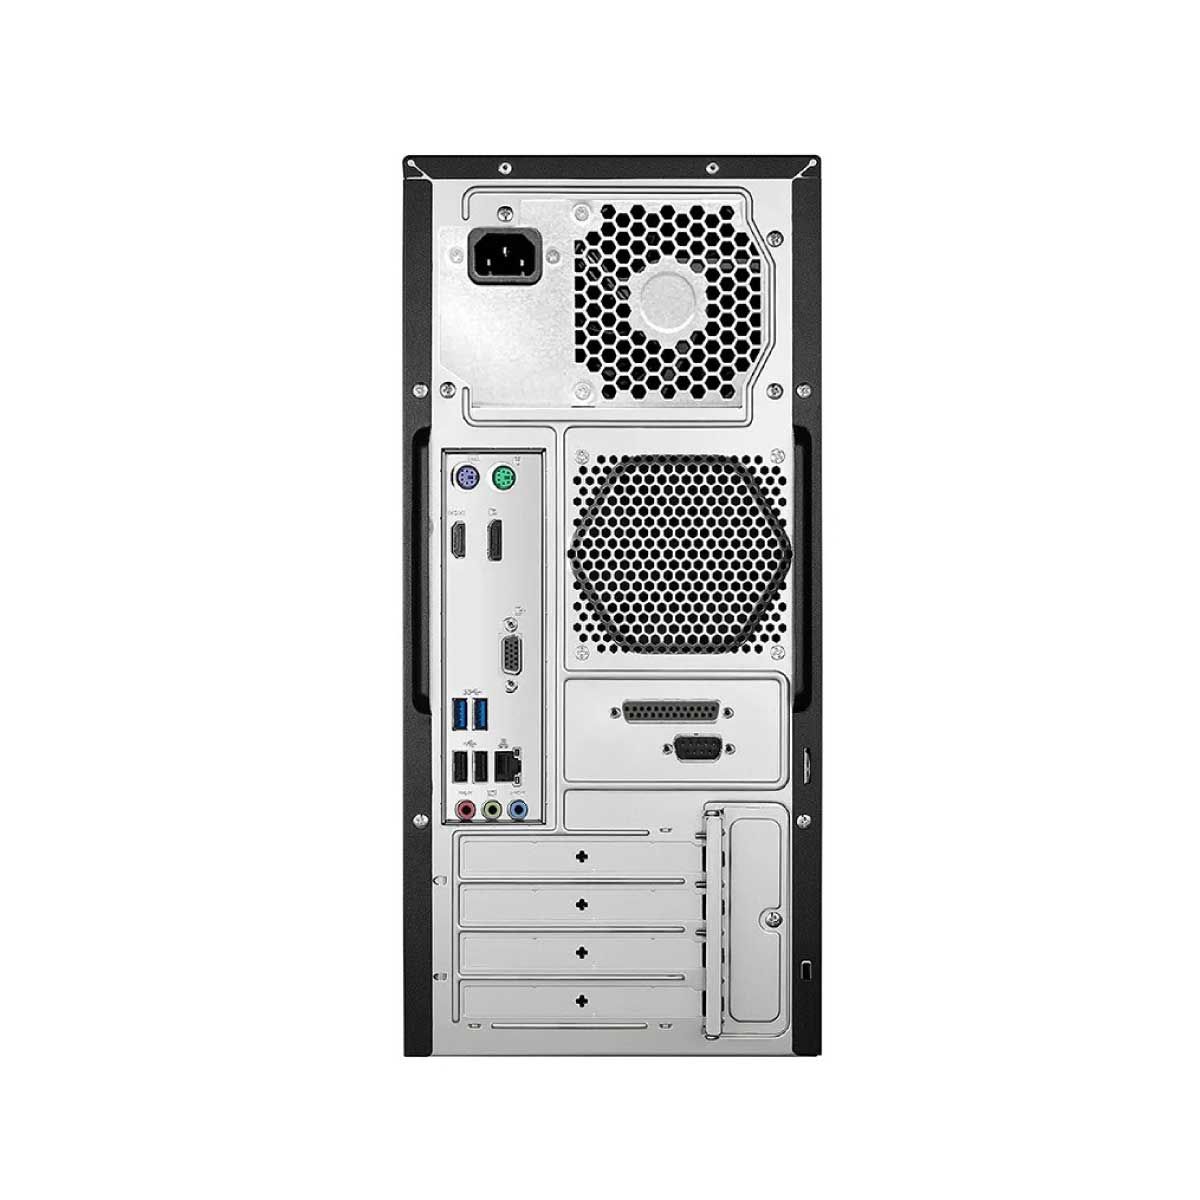 DESKTOP PC (คอมพิวเตอร์ตั้งโต๊ะ) ASUS S500TE-513400003WS